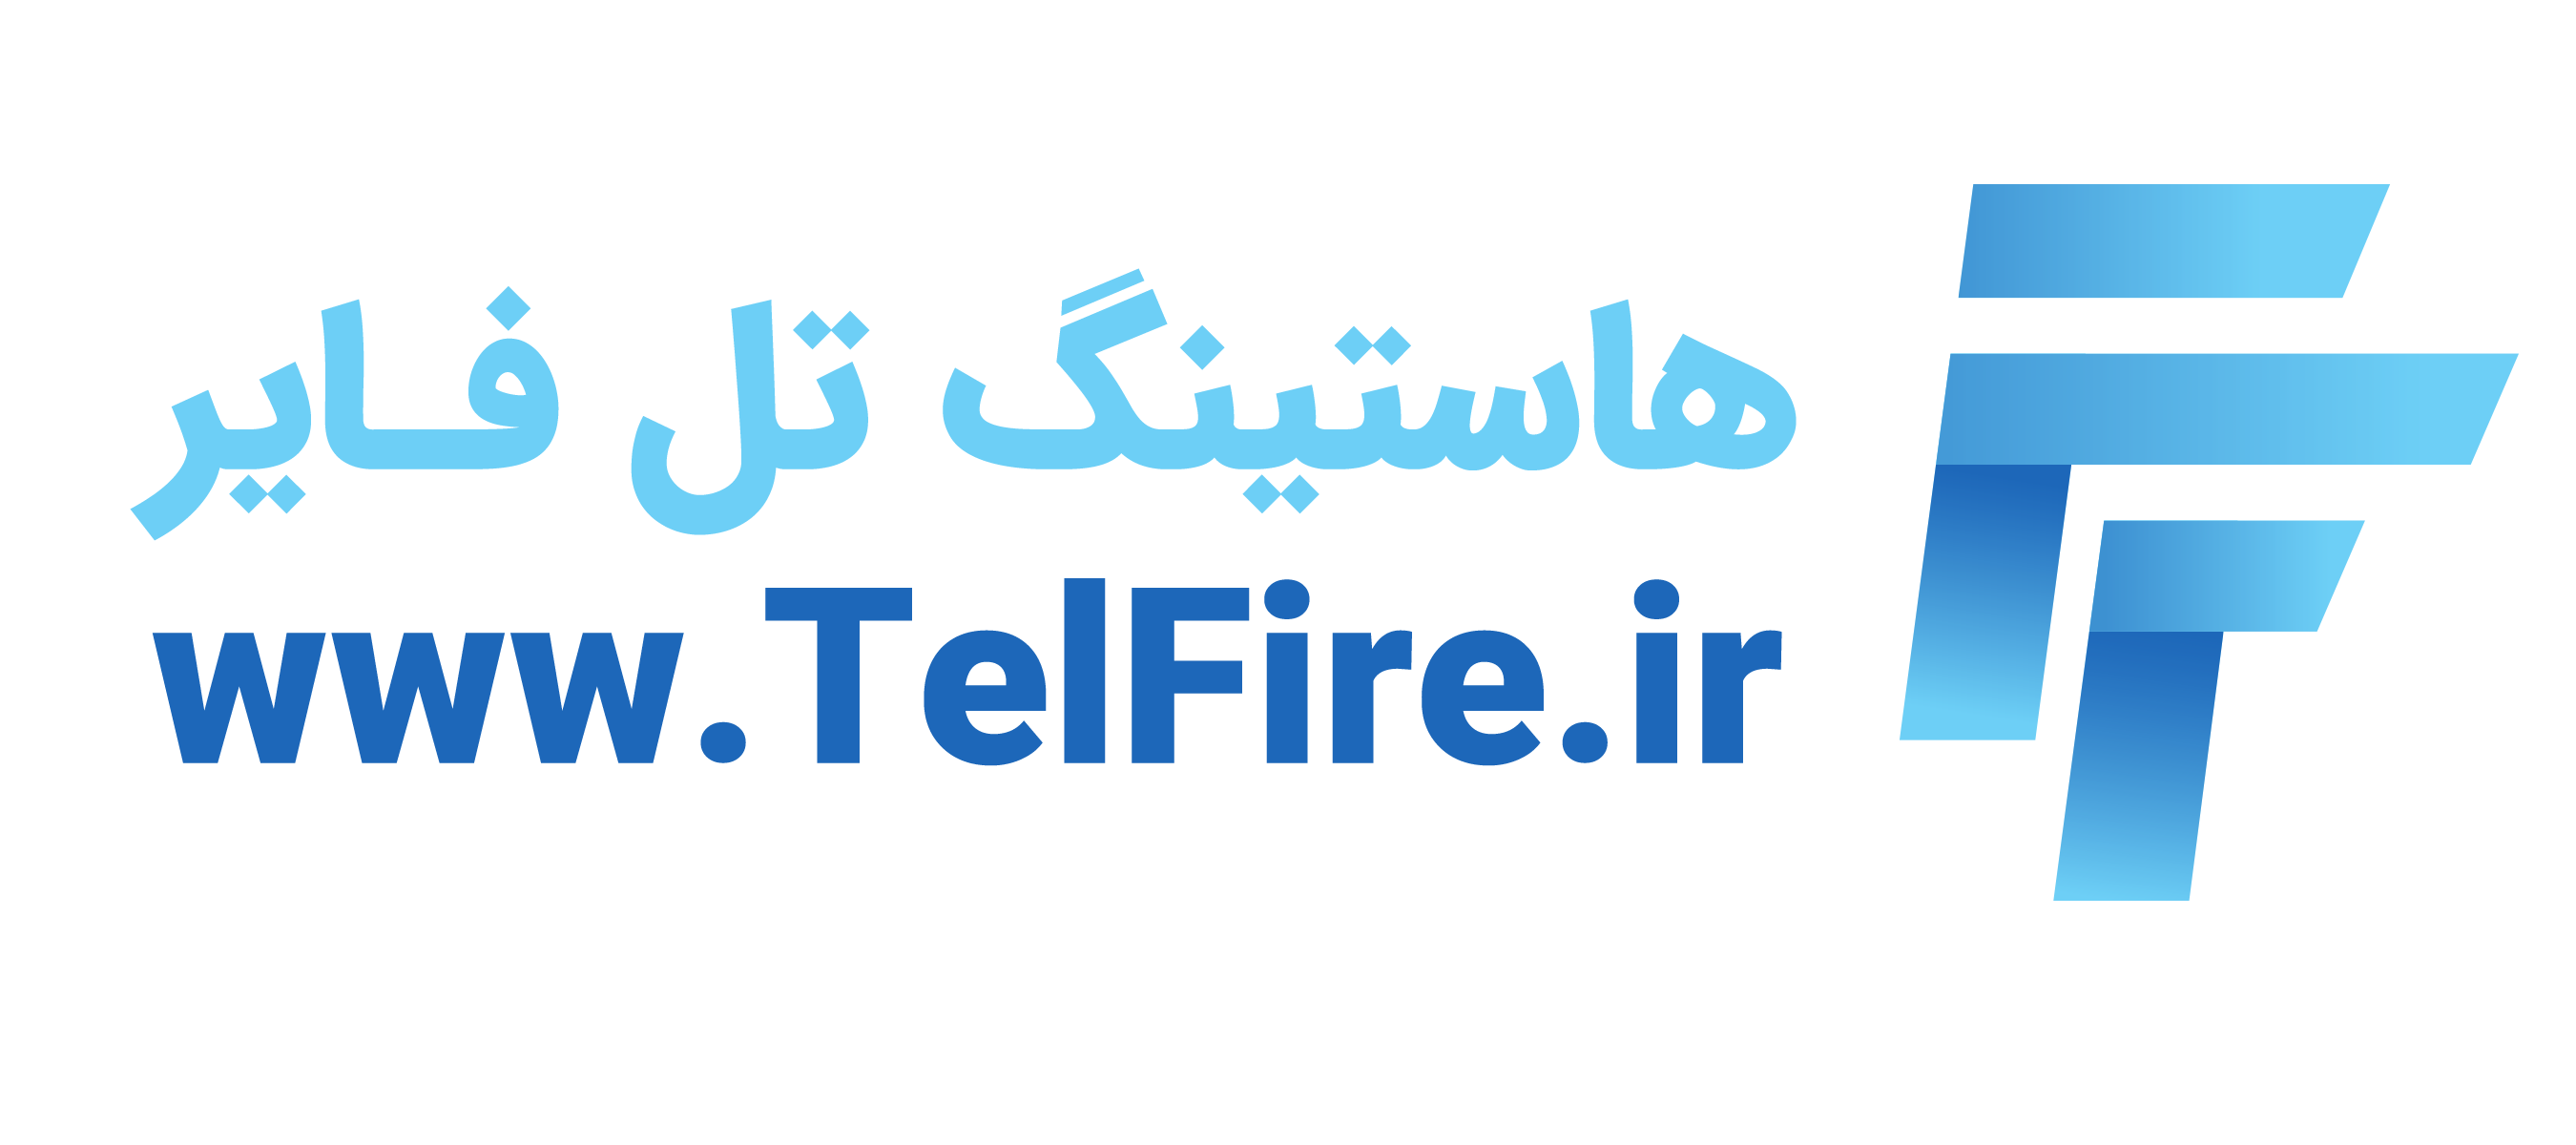 telfire hosting